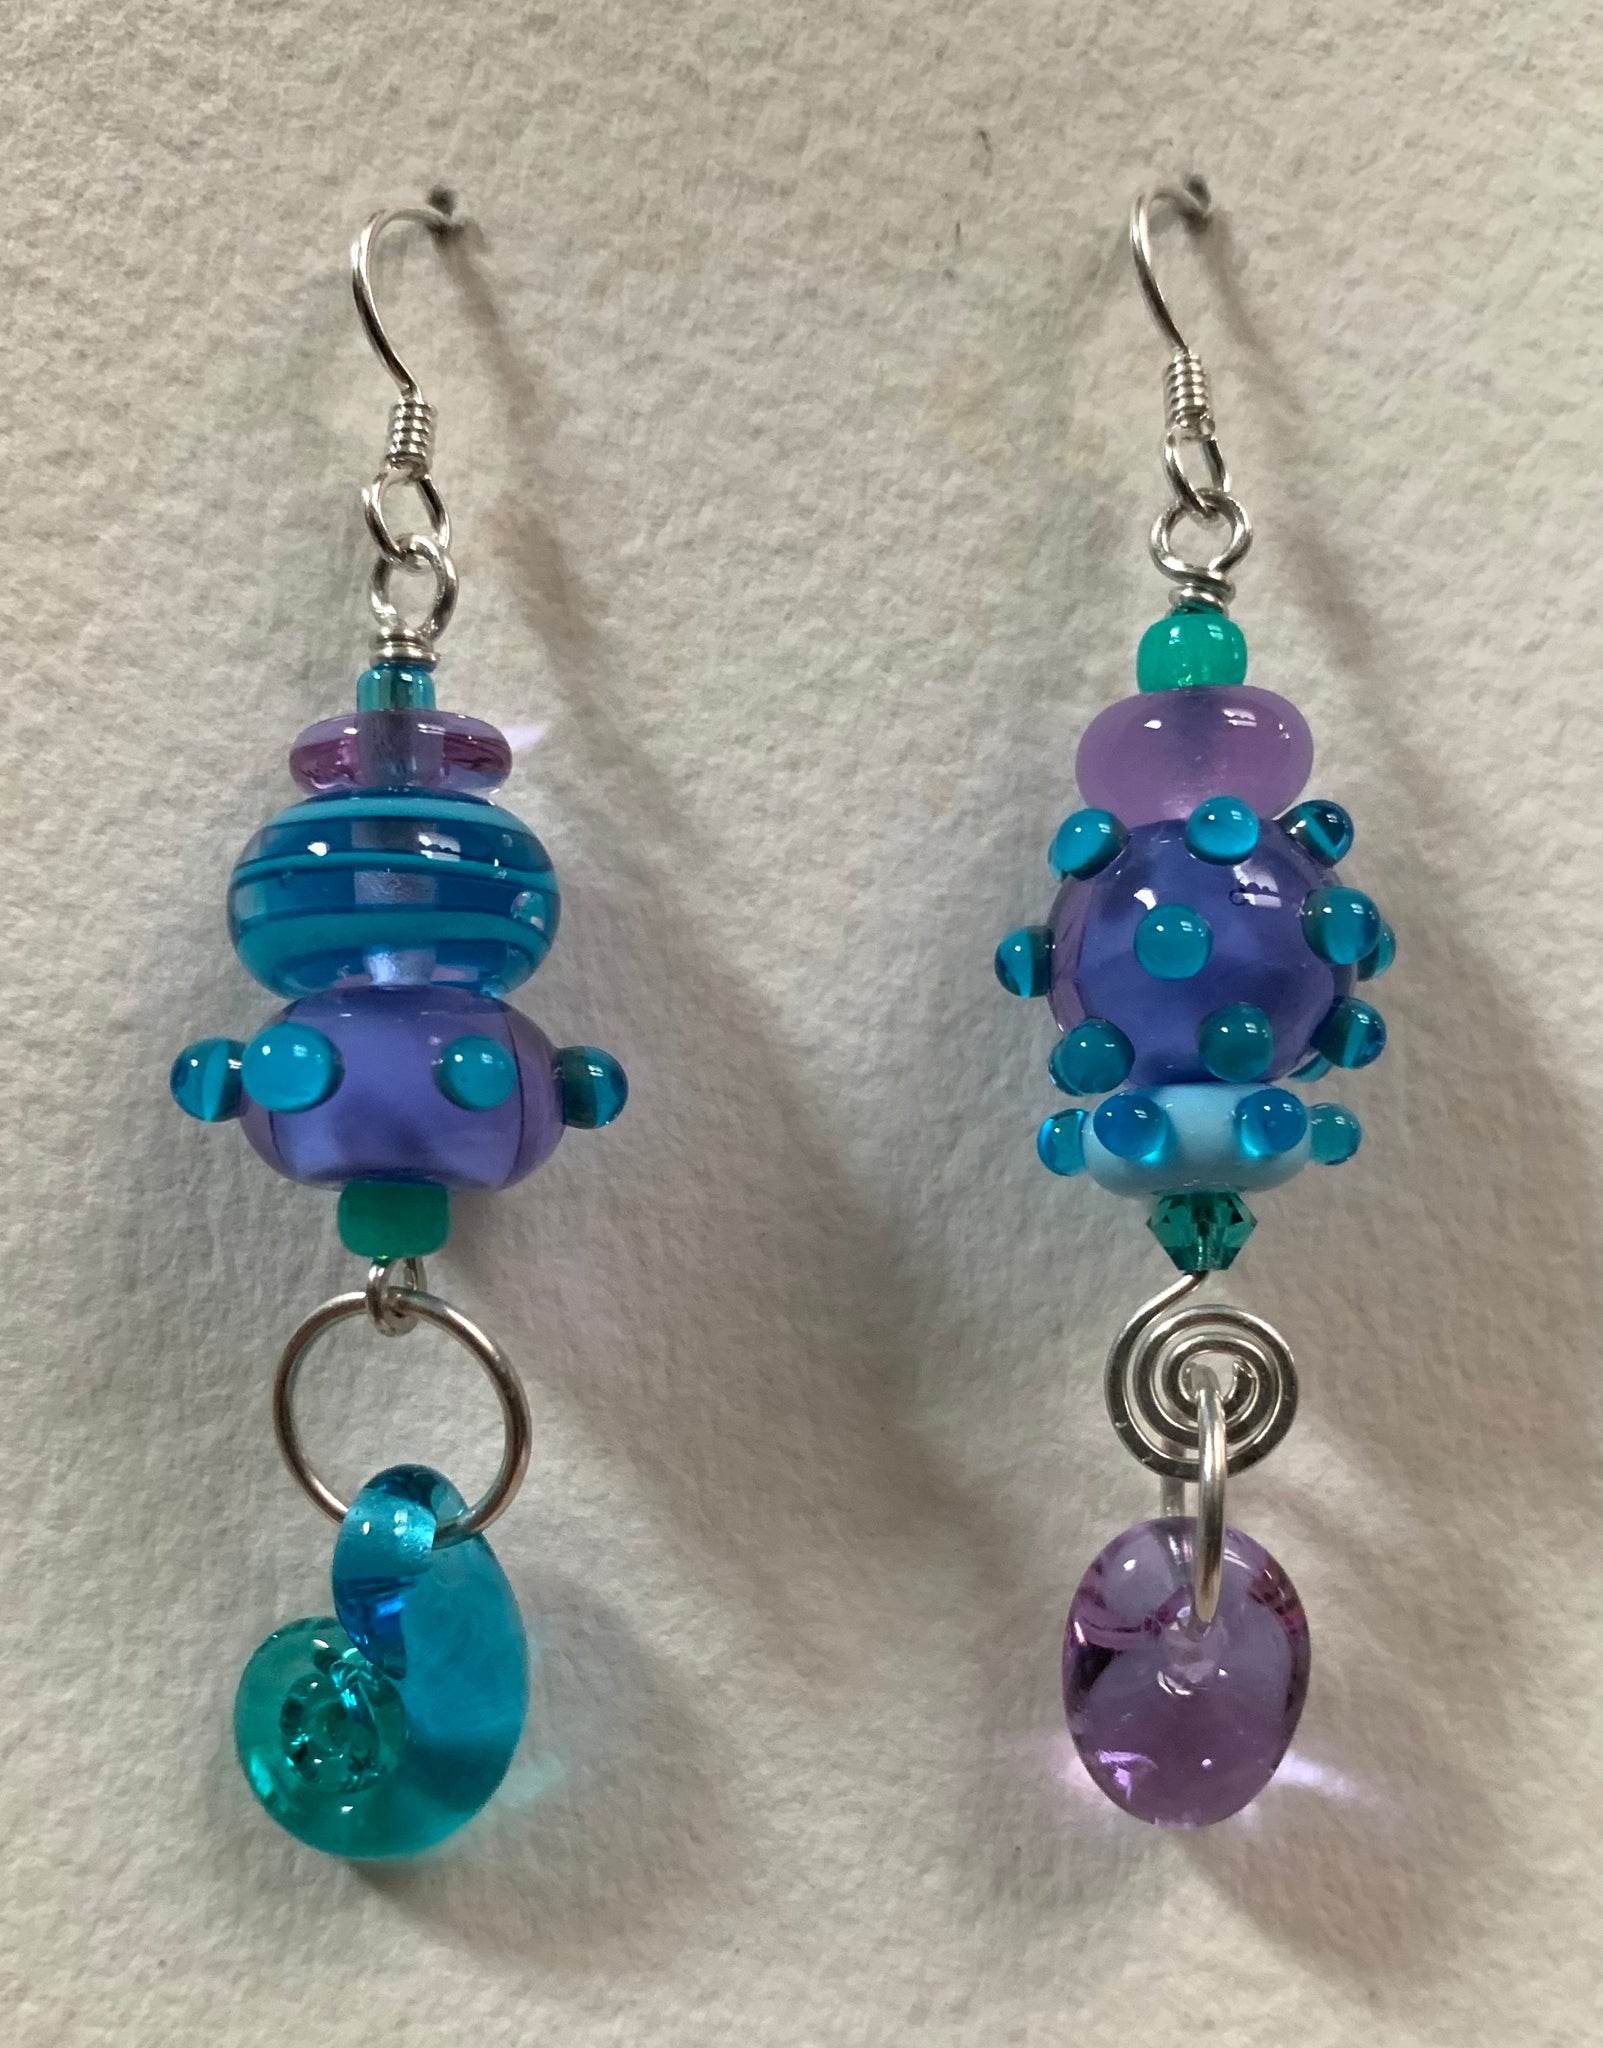 Large asymmetrical earrings lavender and aqua